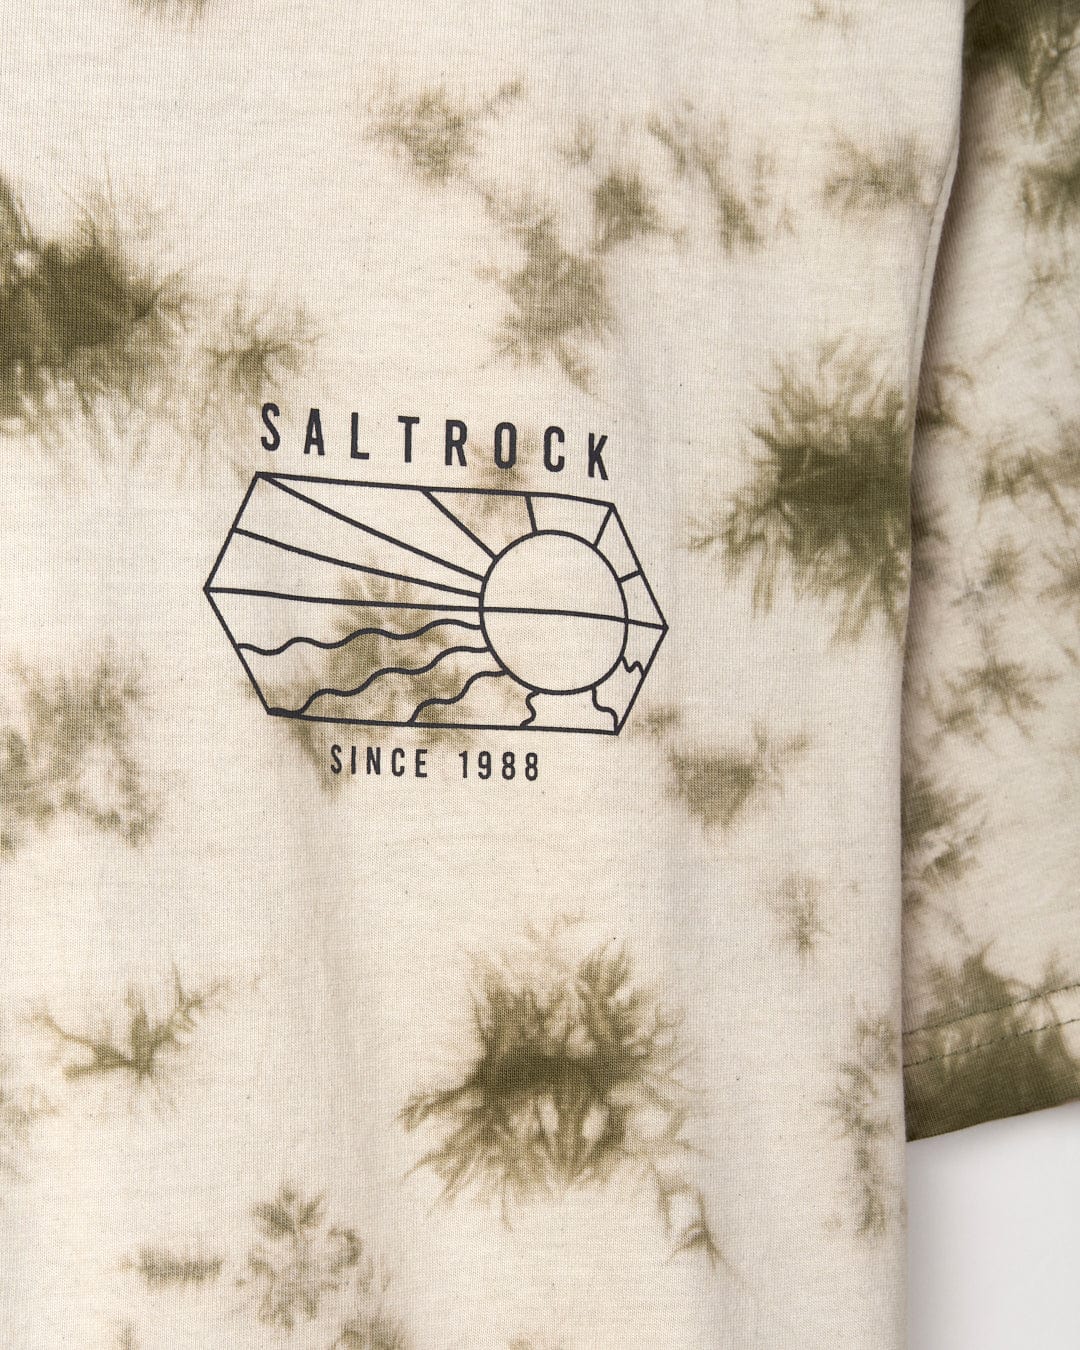 Tie-dye print fabric with Saltrock branding since 1988 logo, machine washable.